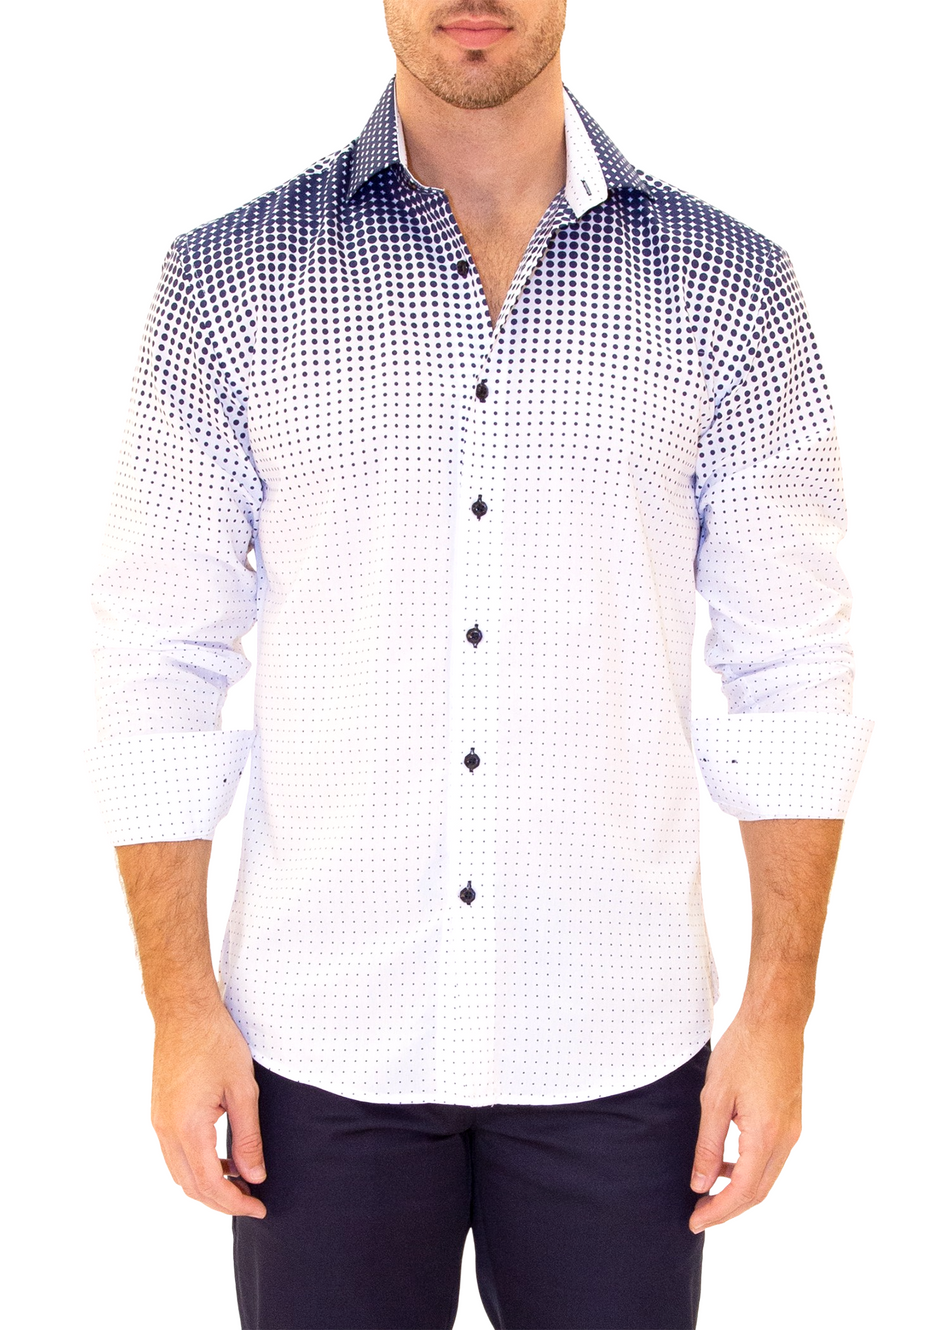 Halftone Effect White Button Up Long Sleeve Dress Shirt